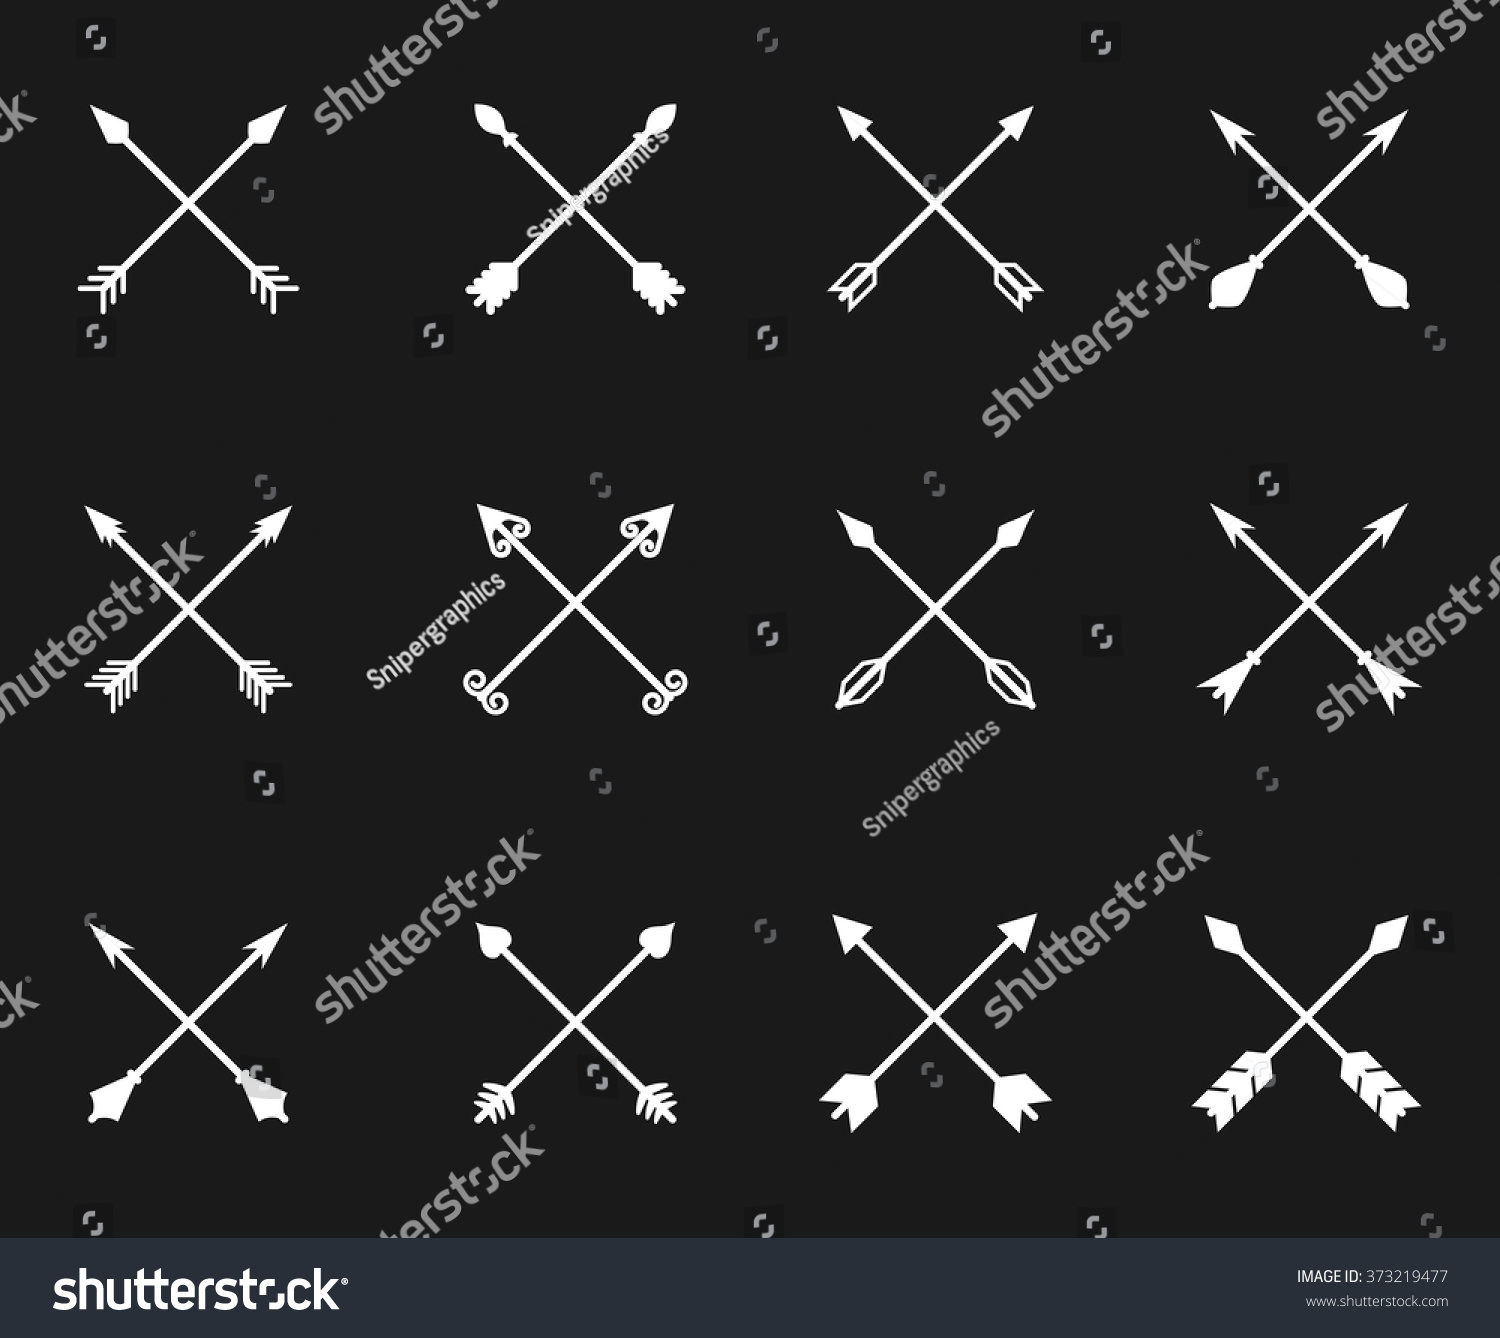 Crossed Arrows Vector Set In Black Background. - 373219477 : Shutterstock